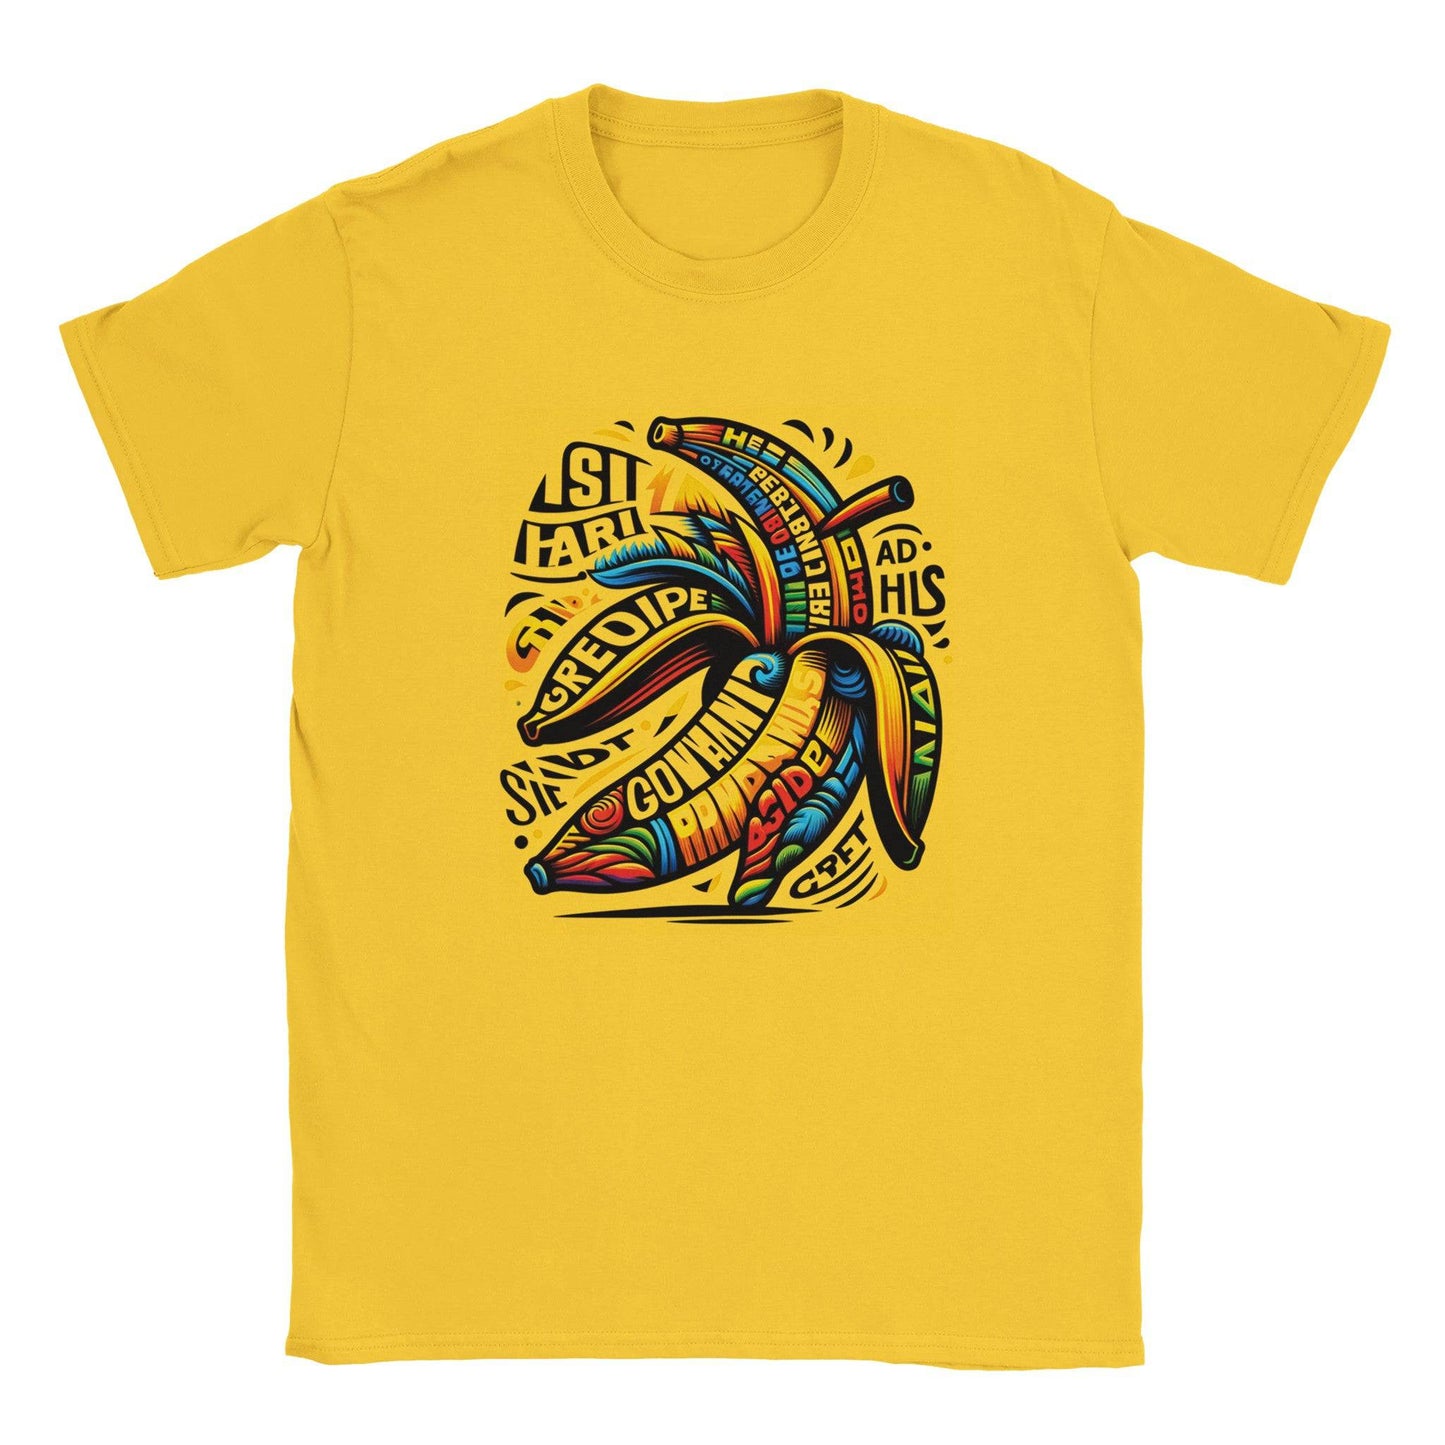 Classic Crewneck "Banana Bliss" T-Shirt T-shirt - 100% soft, breathable cotton - BeinCart